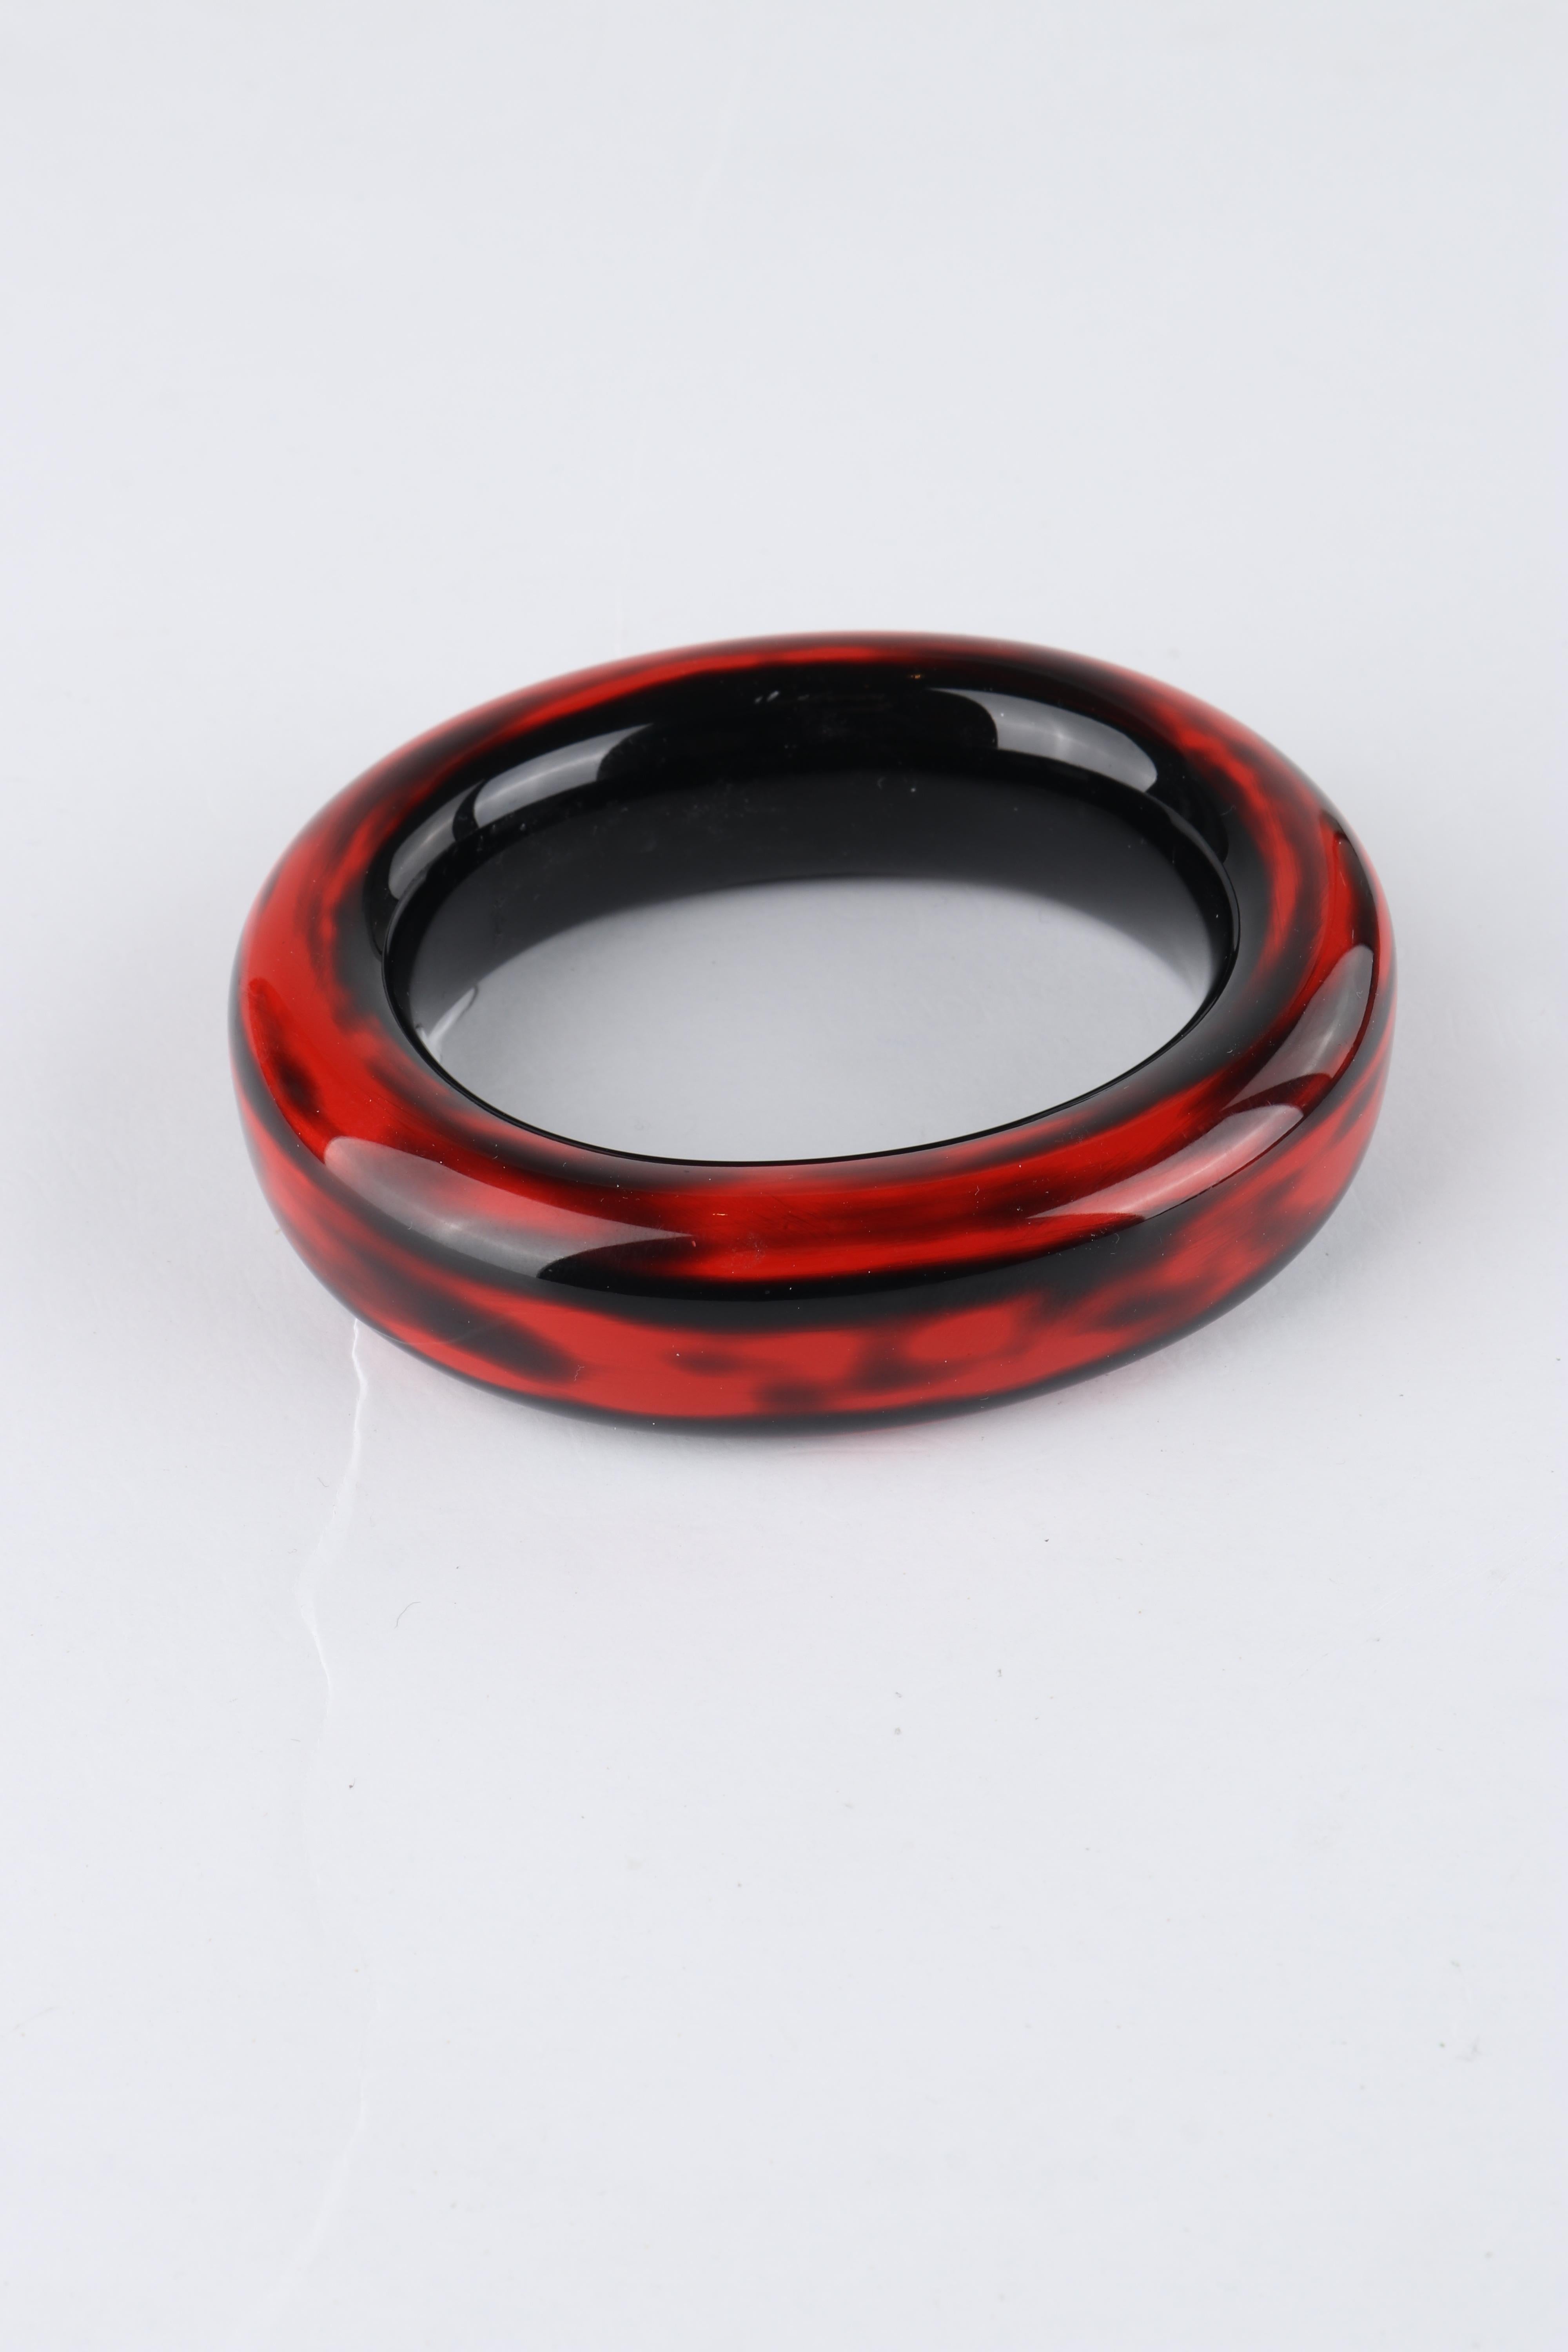 TIFFANY & CO. ELSA PERETTI Black Red Polished Lacquer Hard Wood Bangle Bracelet For Sale 1